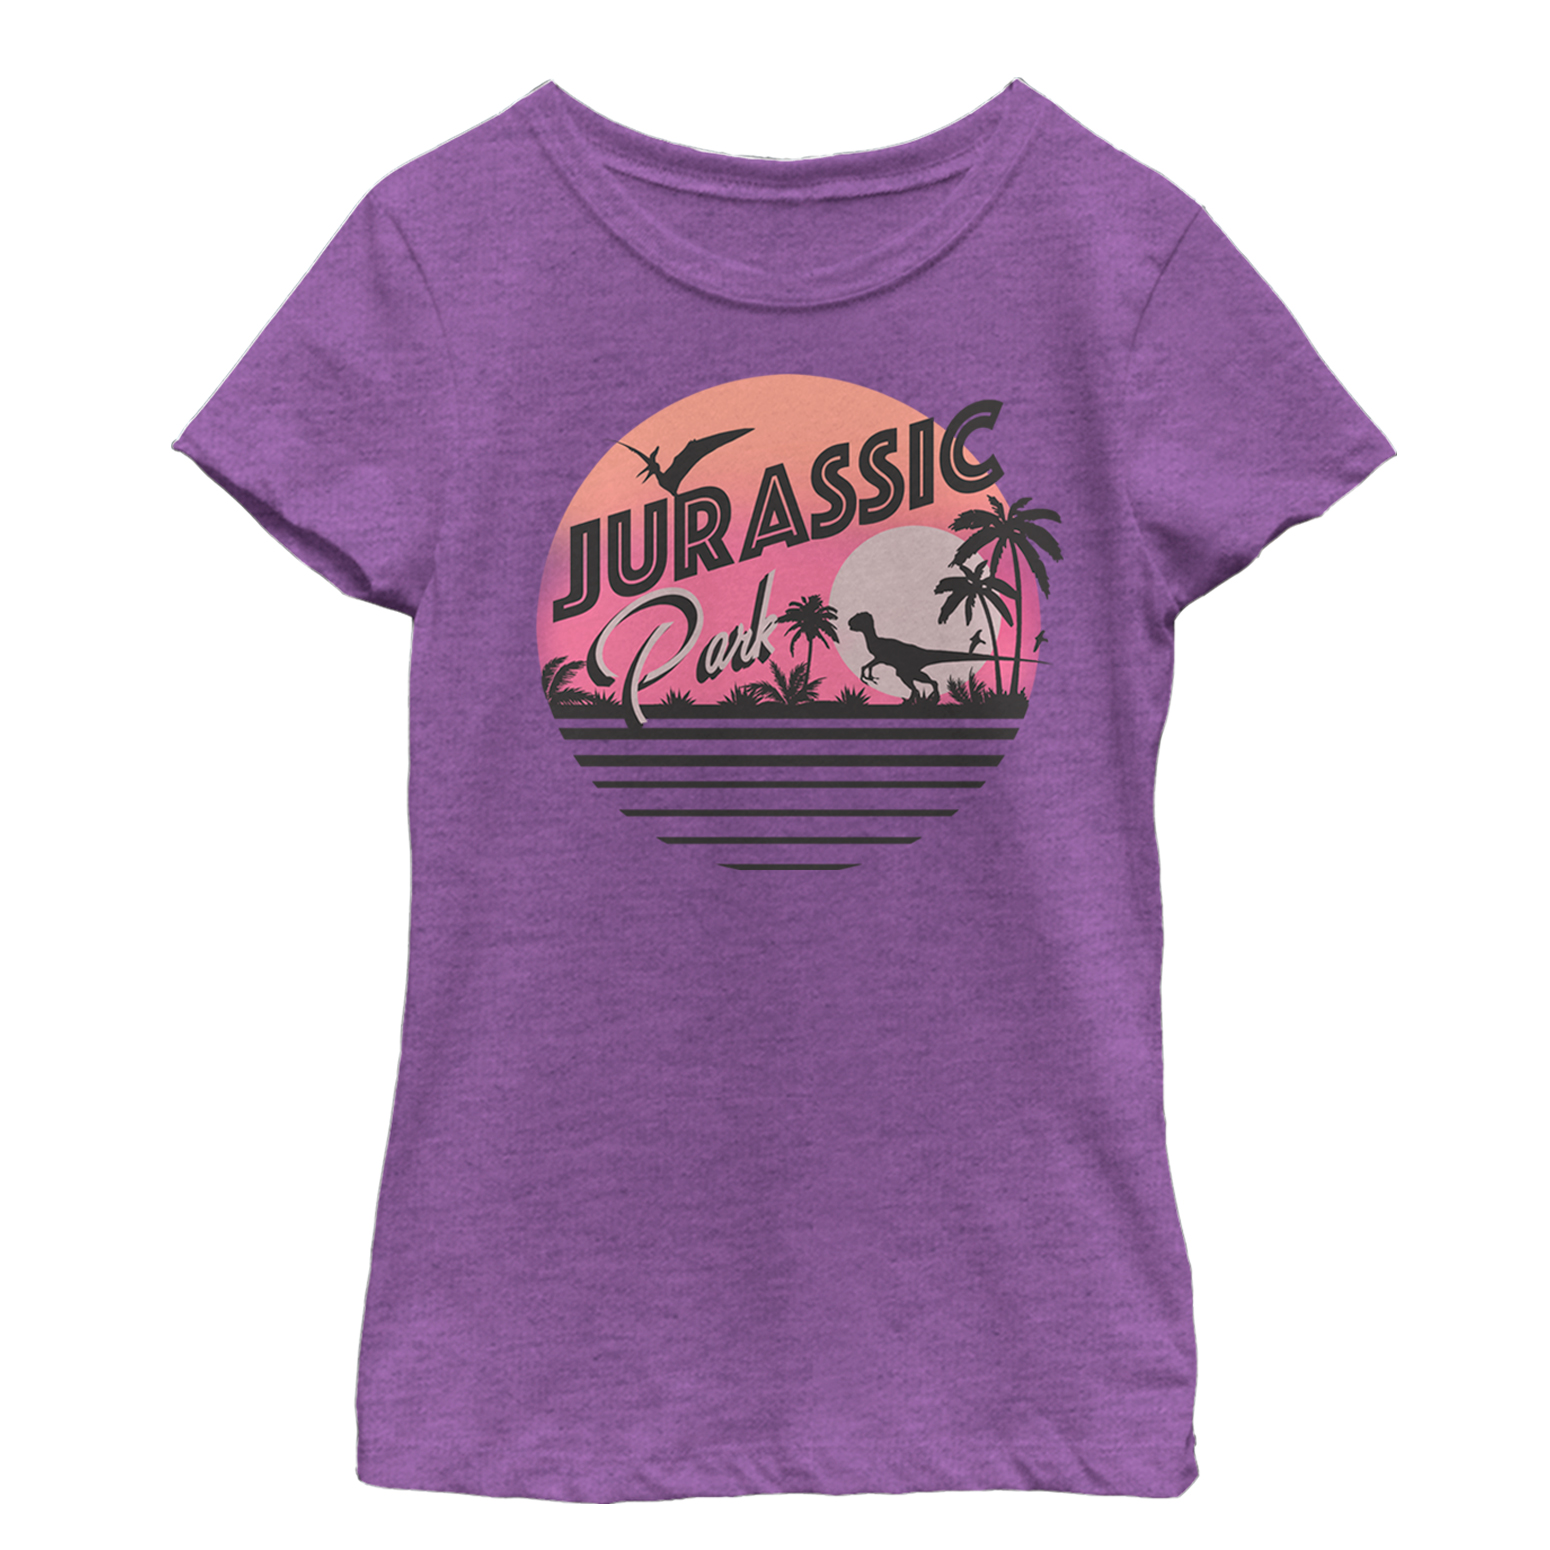 Jurassic Park Girl's Jurassic Park Retro Postcard  Graphic Tee